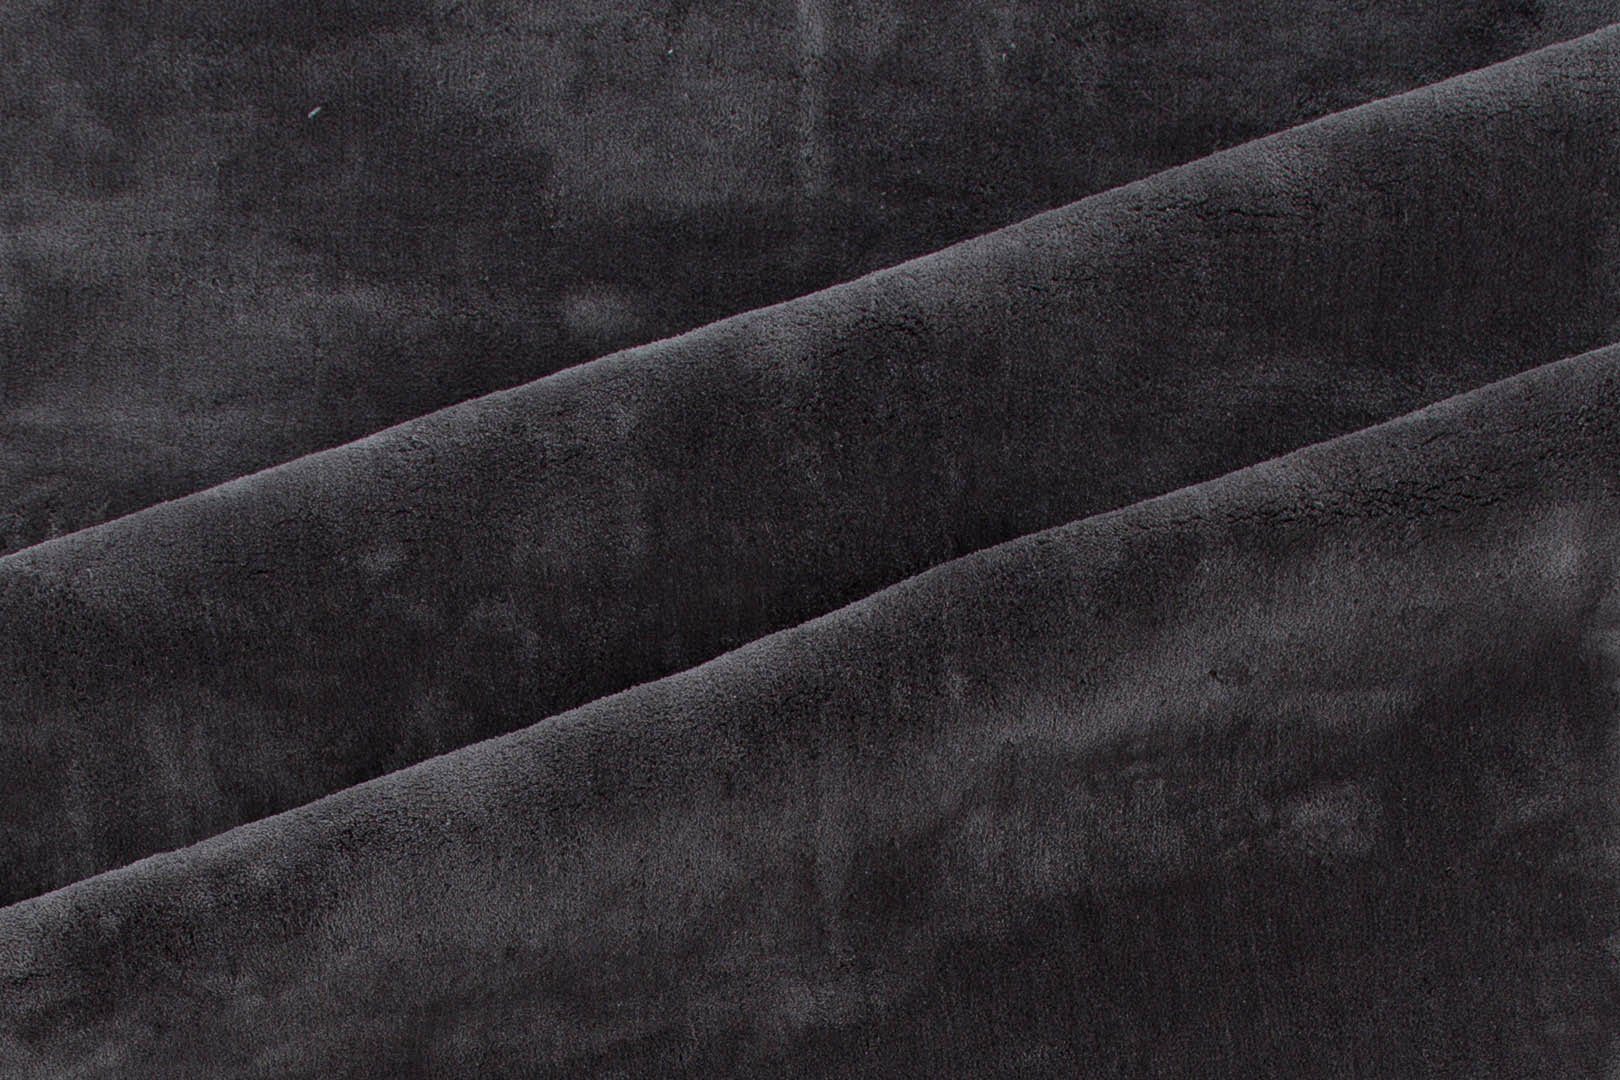 Teppich cm 1 240x170 Höhe: Undra ebuy24, mm dunkelgrau., Teppich Polyester